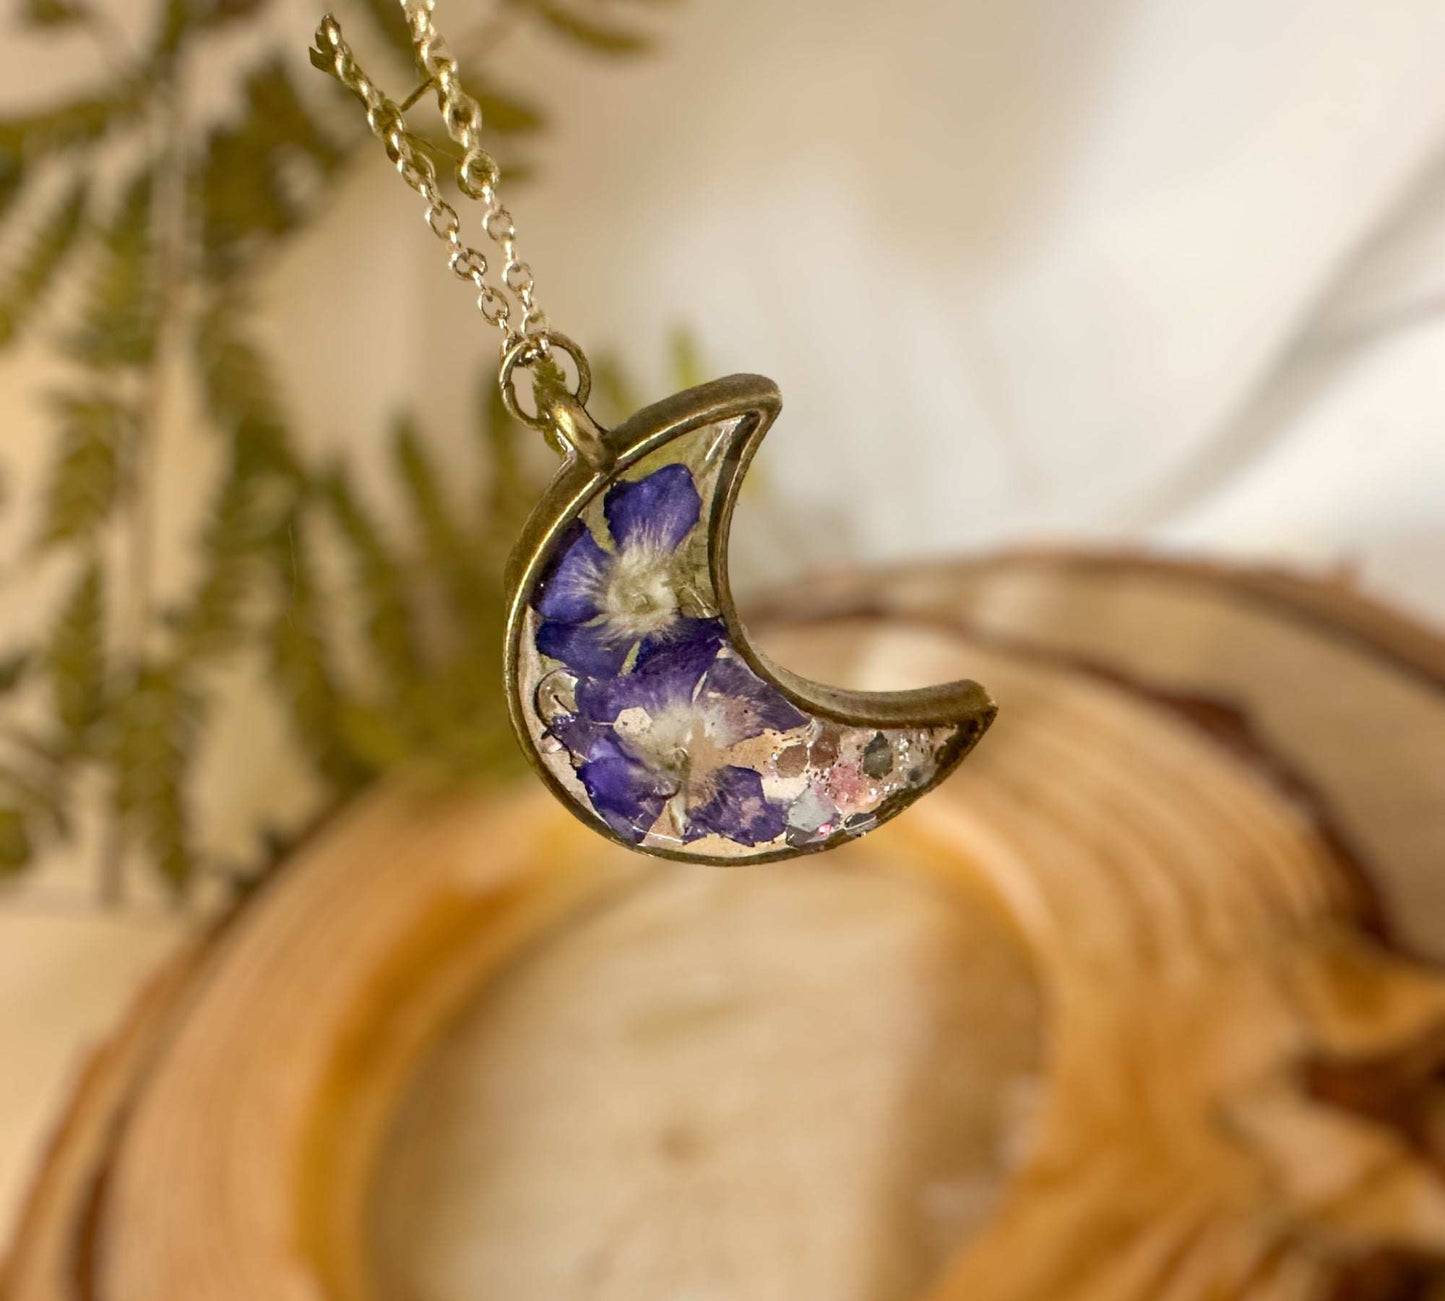 Lunar Blooms: Resin Moon Pendant Handmade with Resin & Dried Flowers  